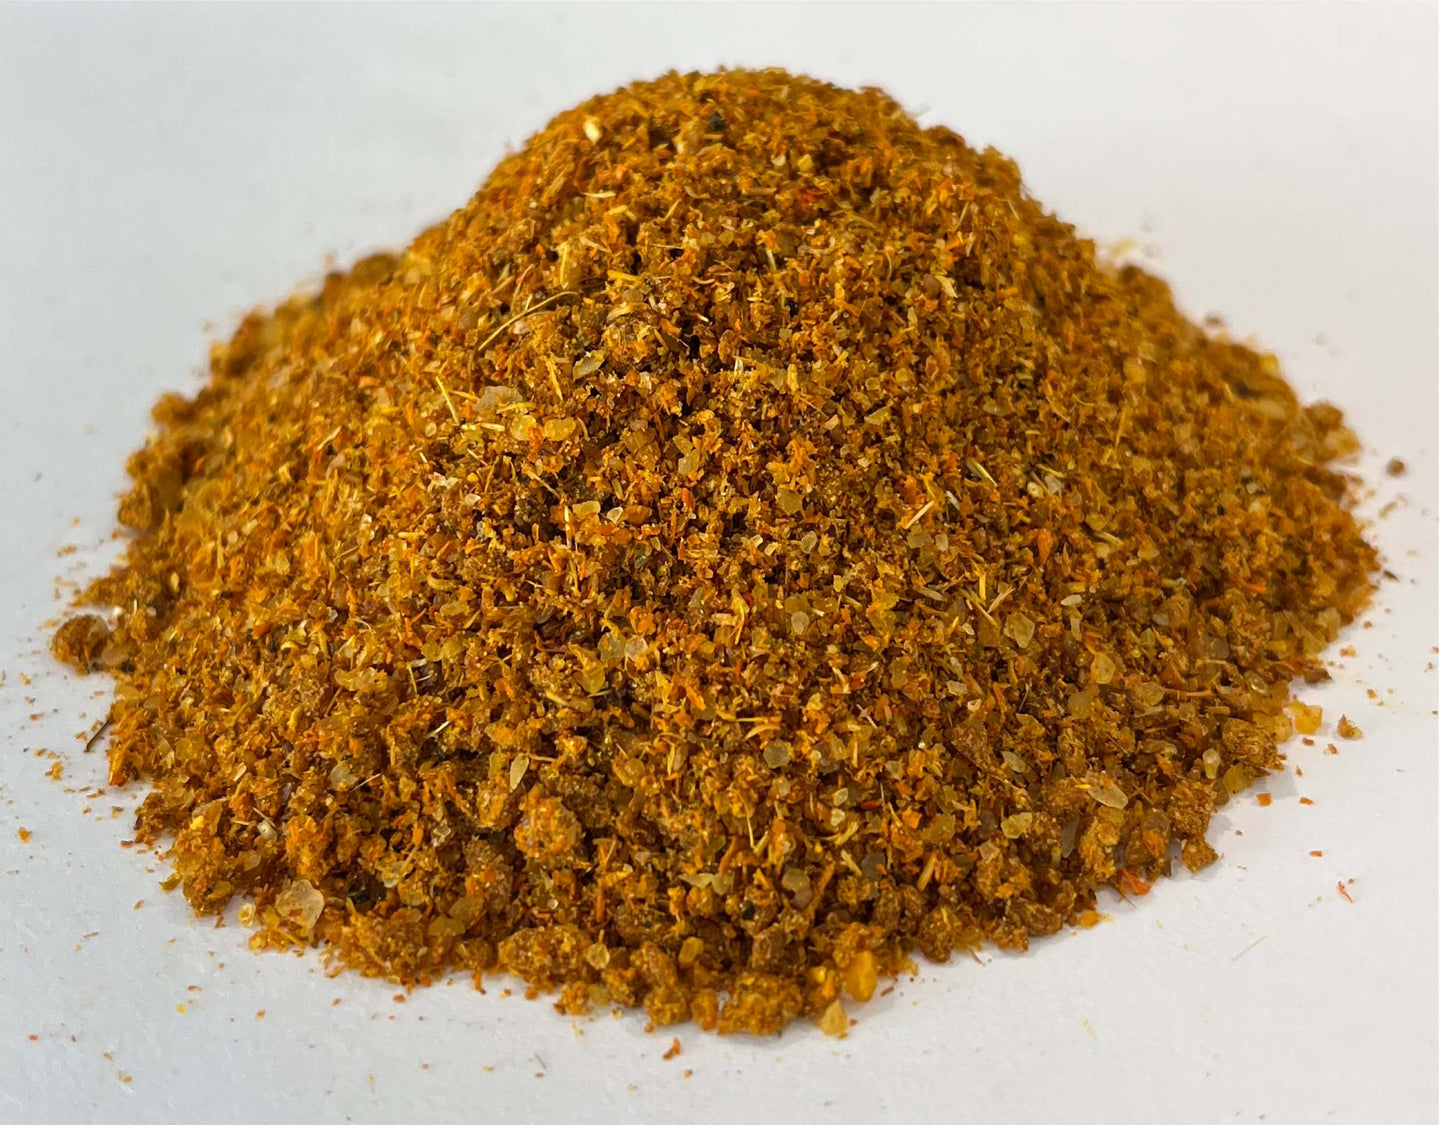 Svanetian salt powder